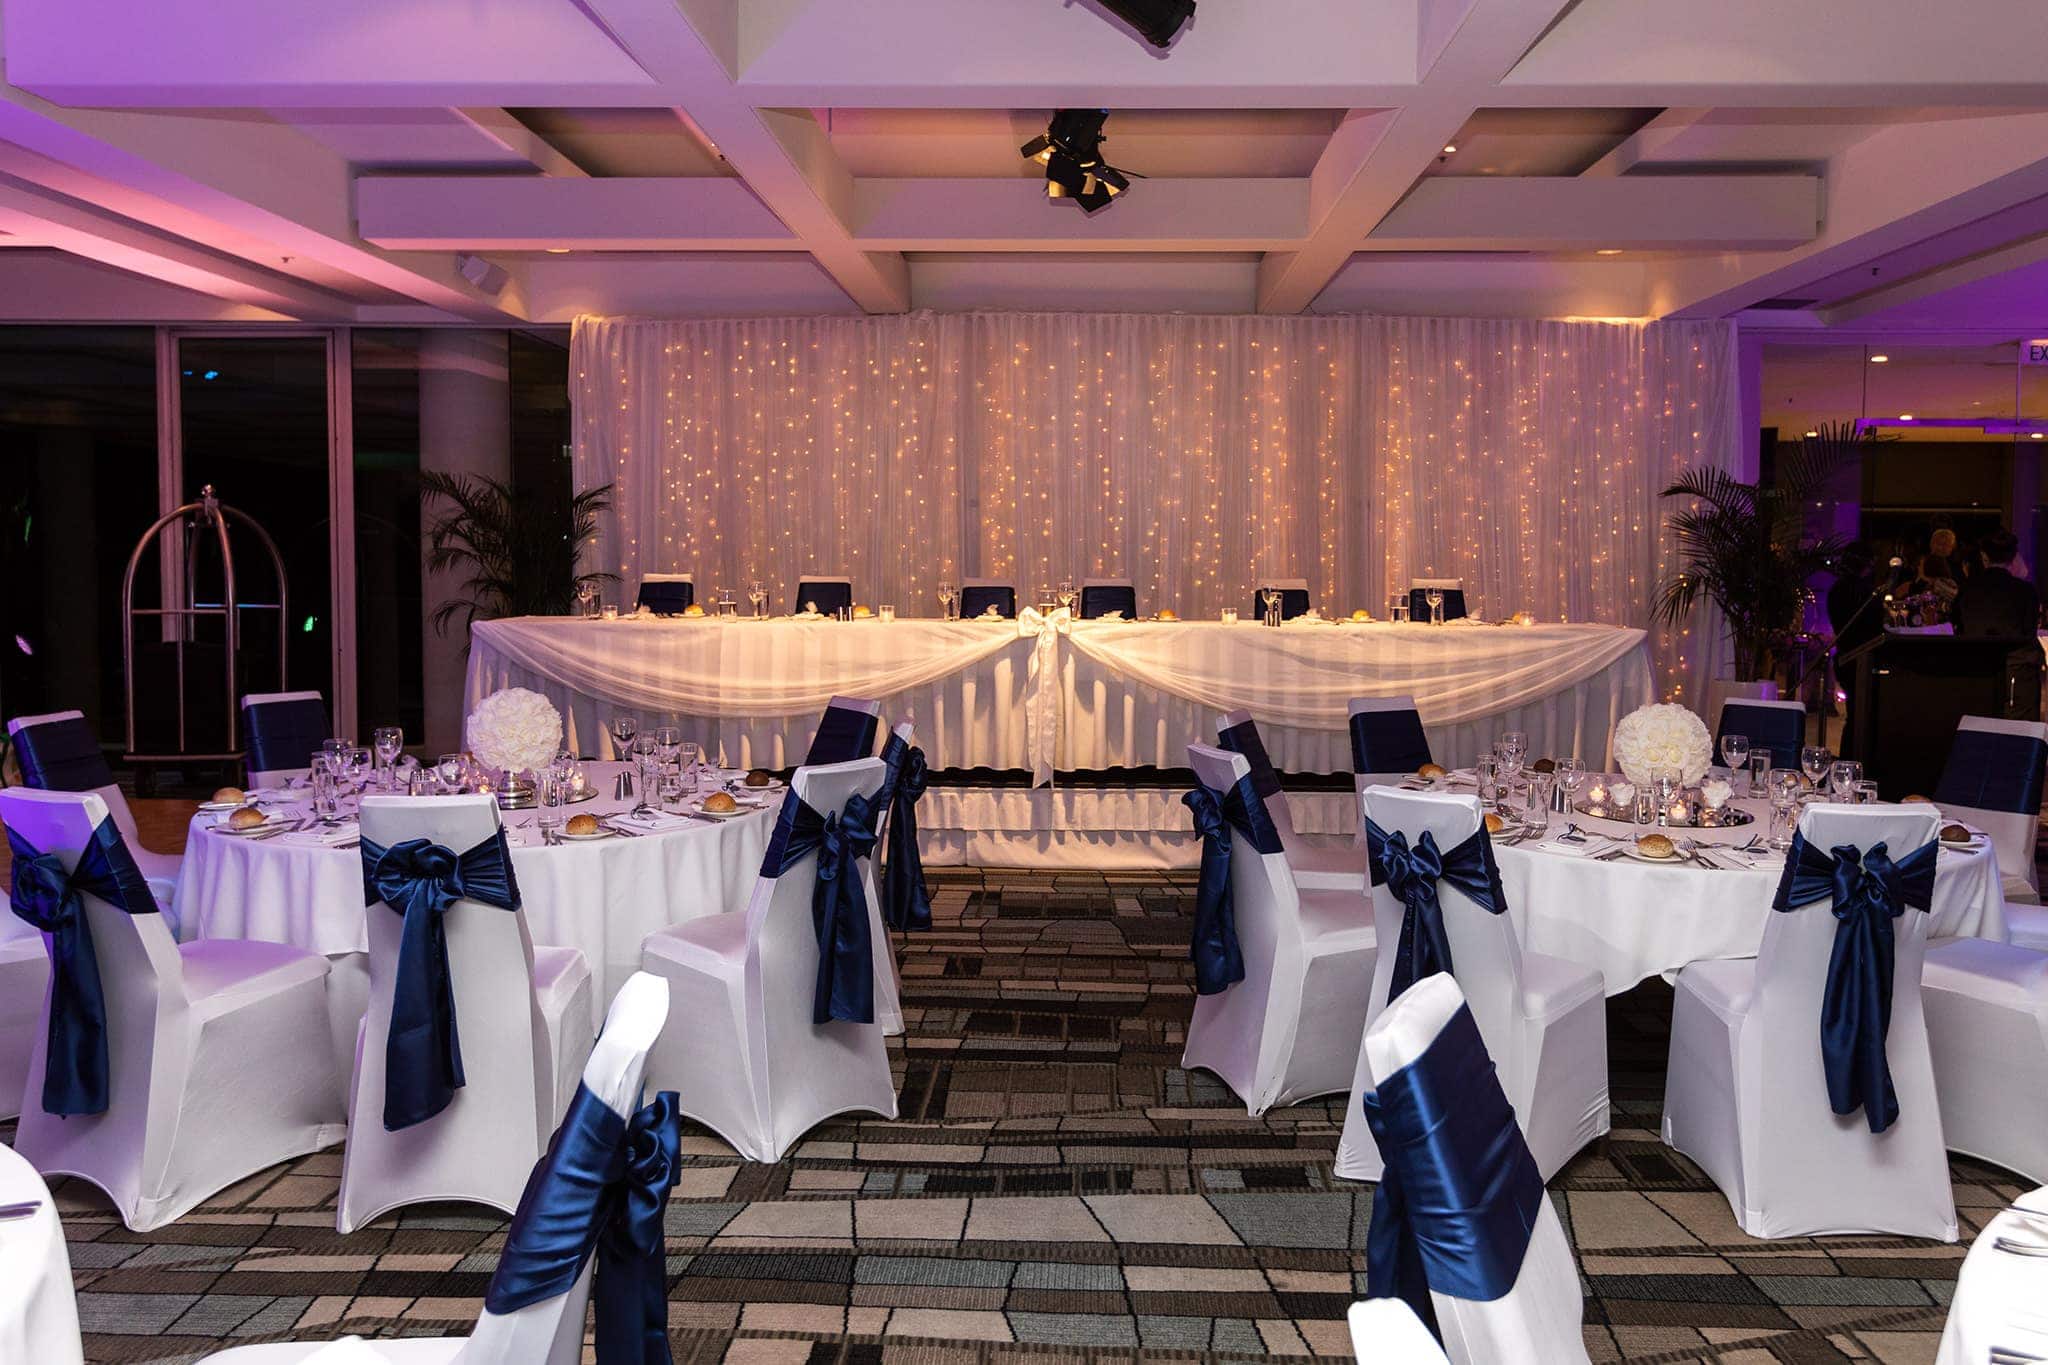 Formal wedding reception setup at the Sheraton Marina Mirage Gold Coast